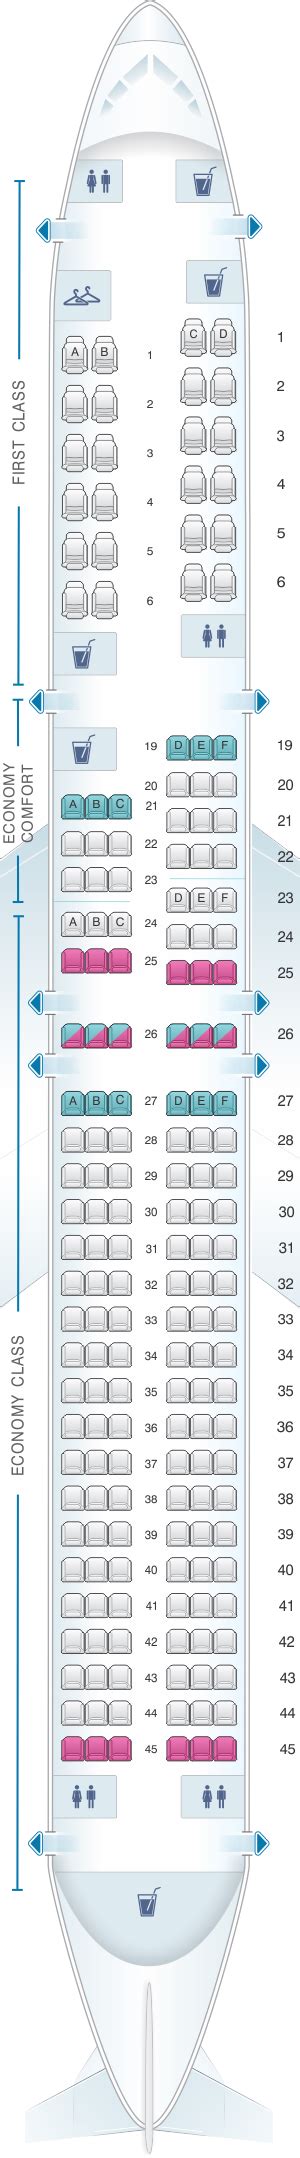 boeing 757 delta seating